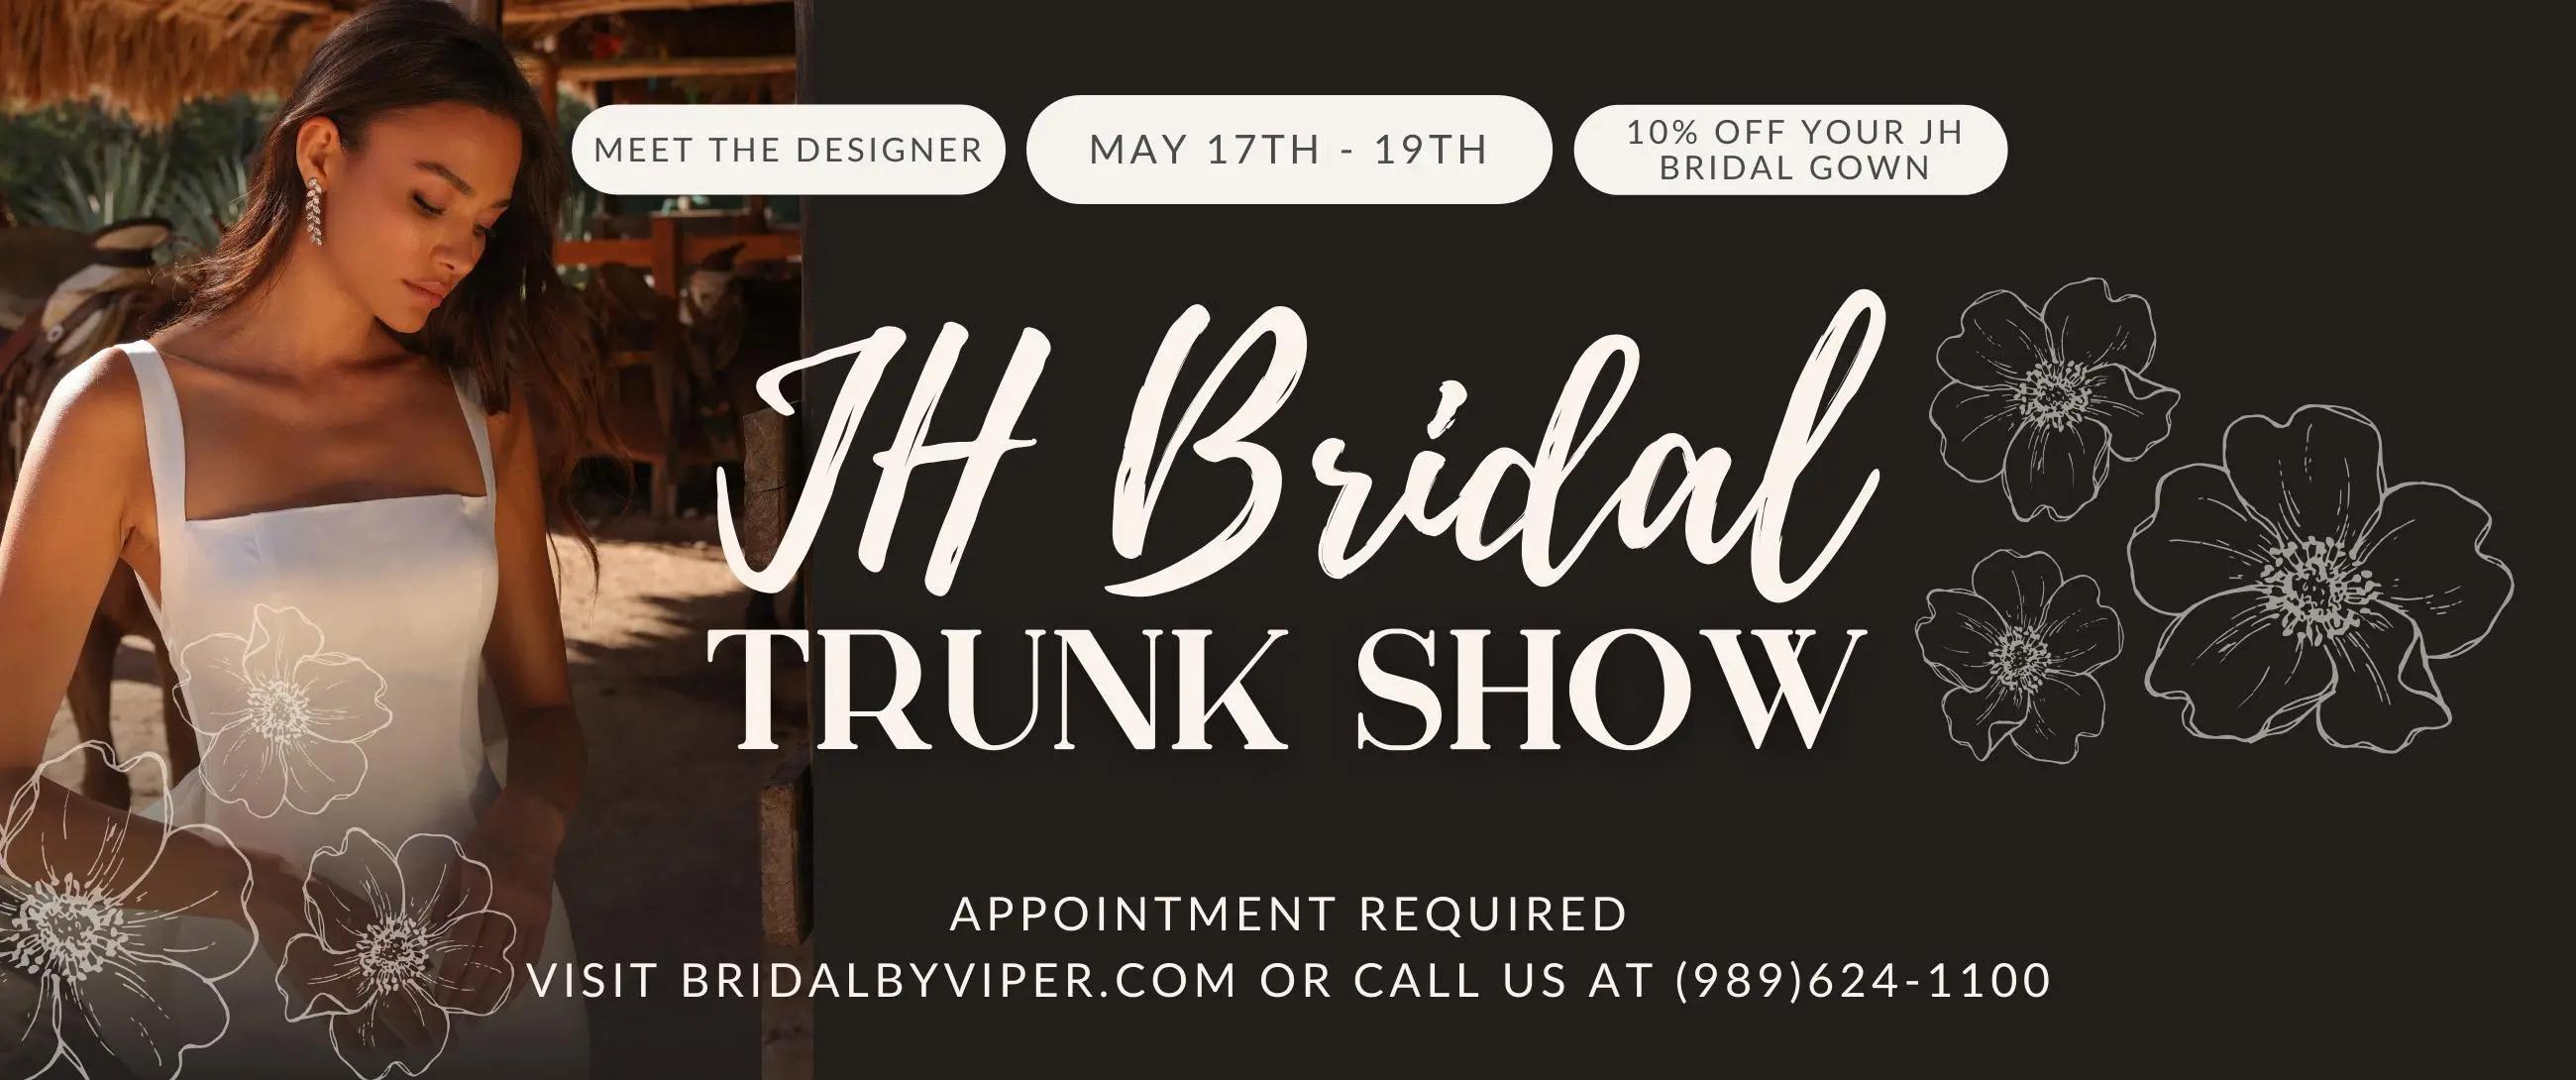 JH Bridal Trunk Show desktop banner